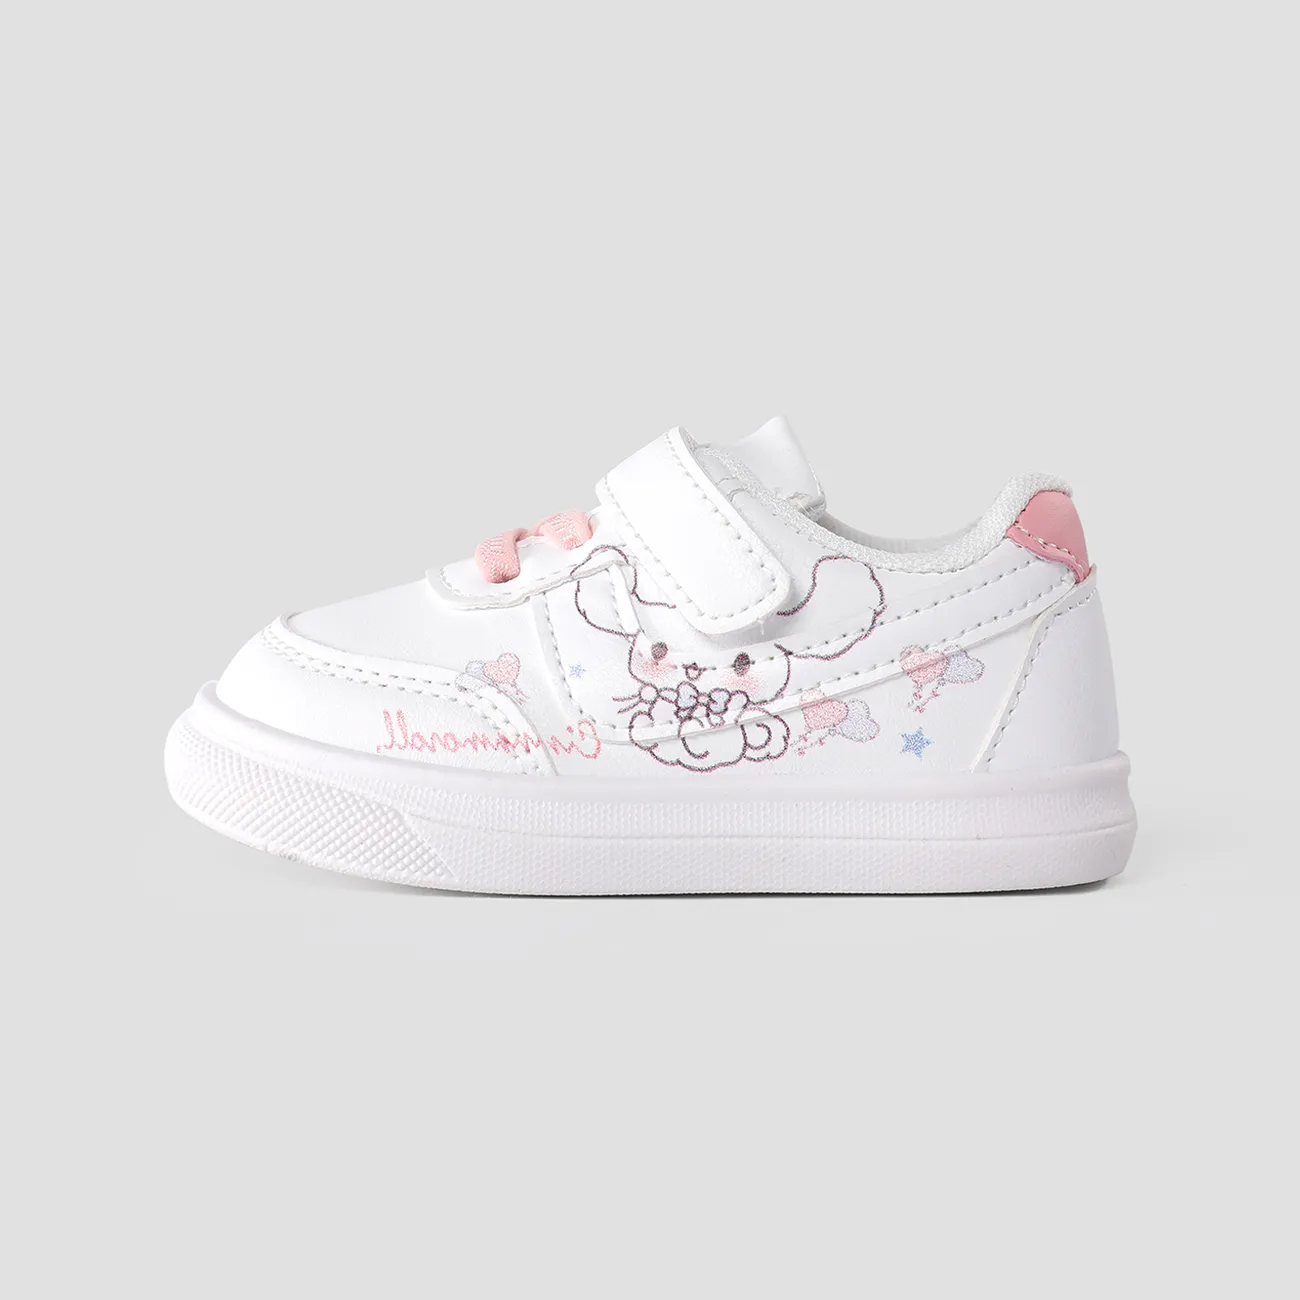 Toddler & Kids Childlike Rabbit Pattern Velcro Casual Shoes Pink big image 1